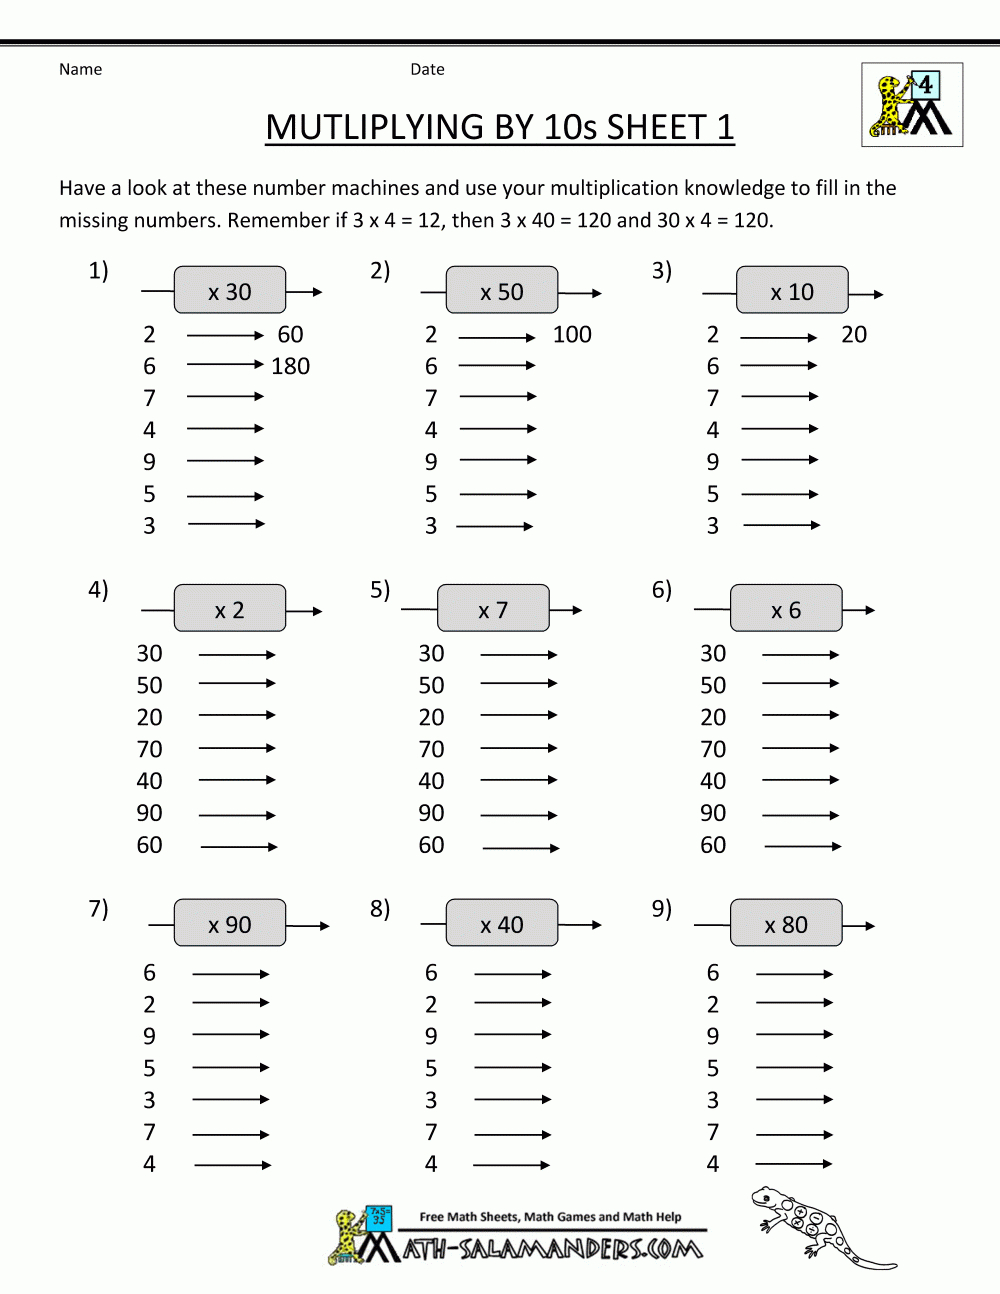 Multiplication Fact Sheets | Free Printable Math Worksheets For Grade 4